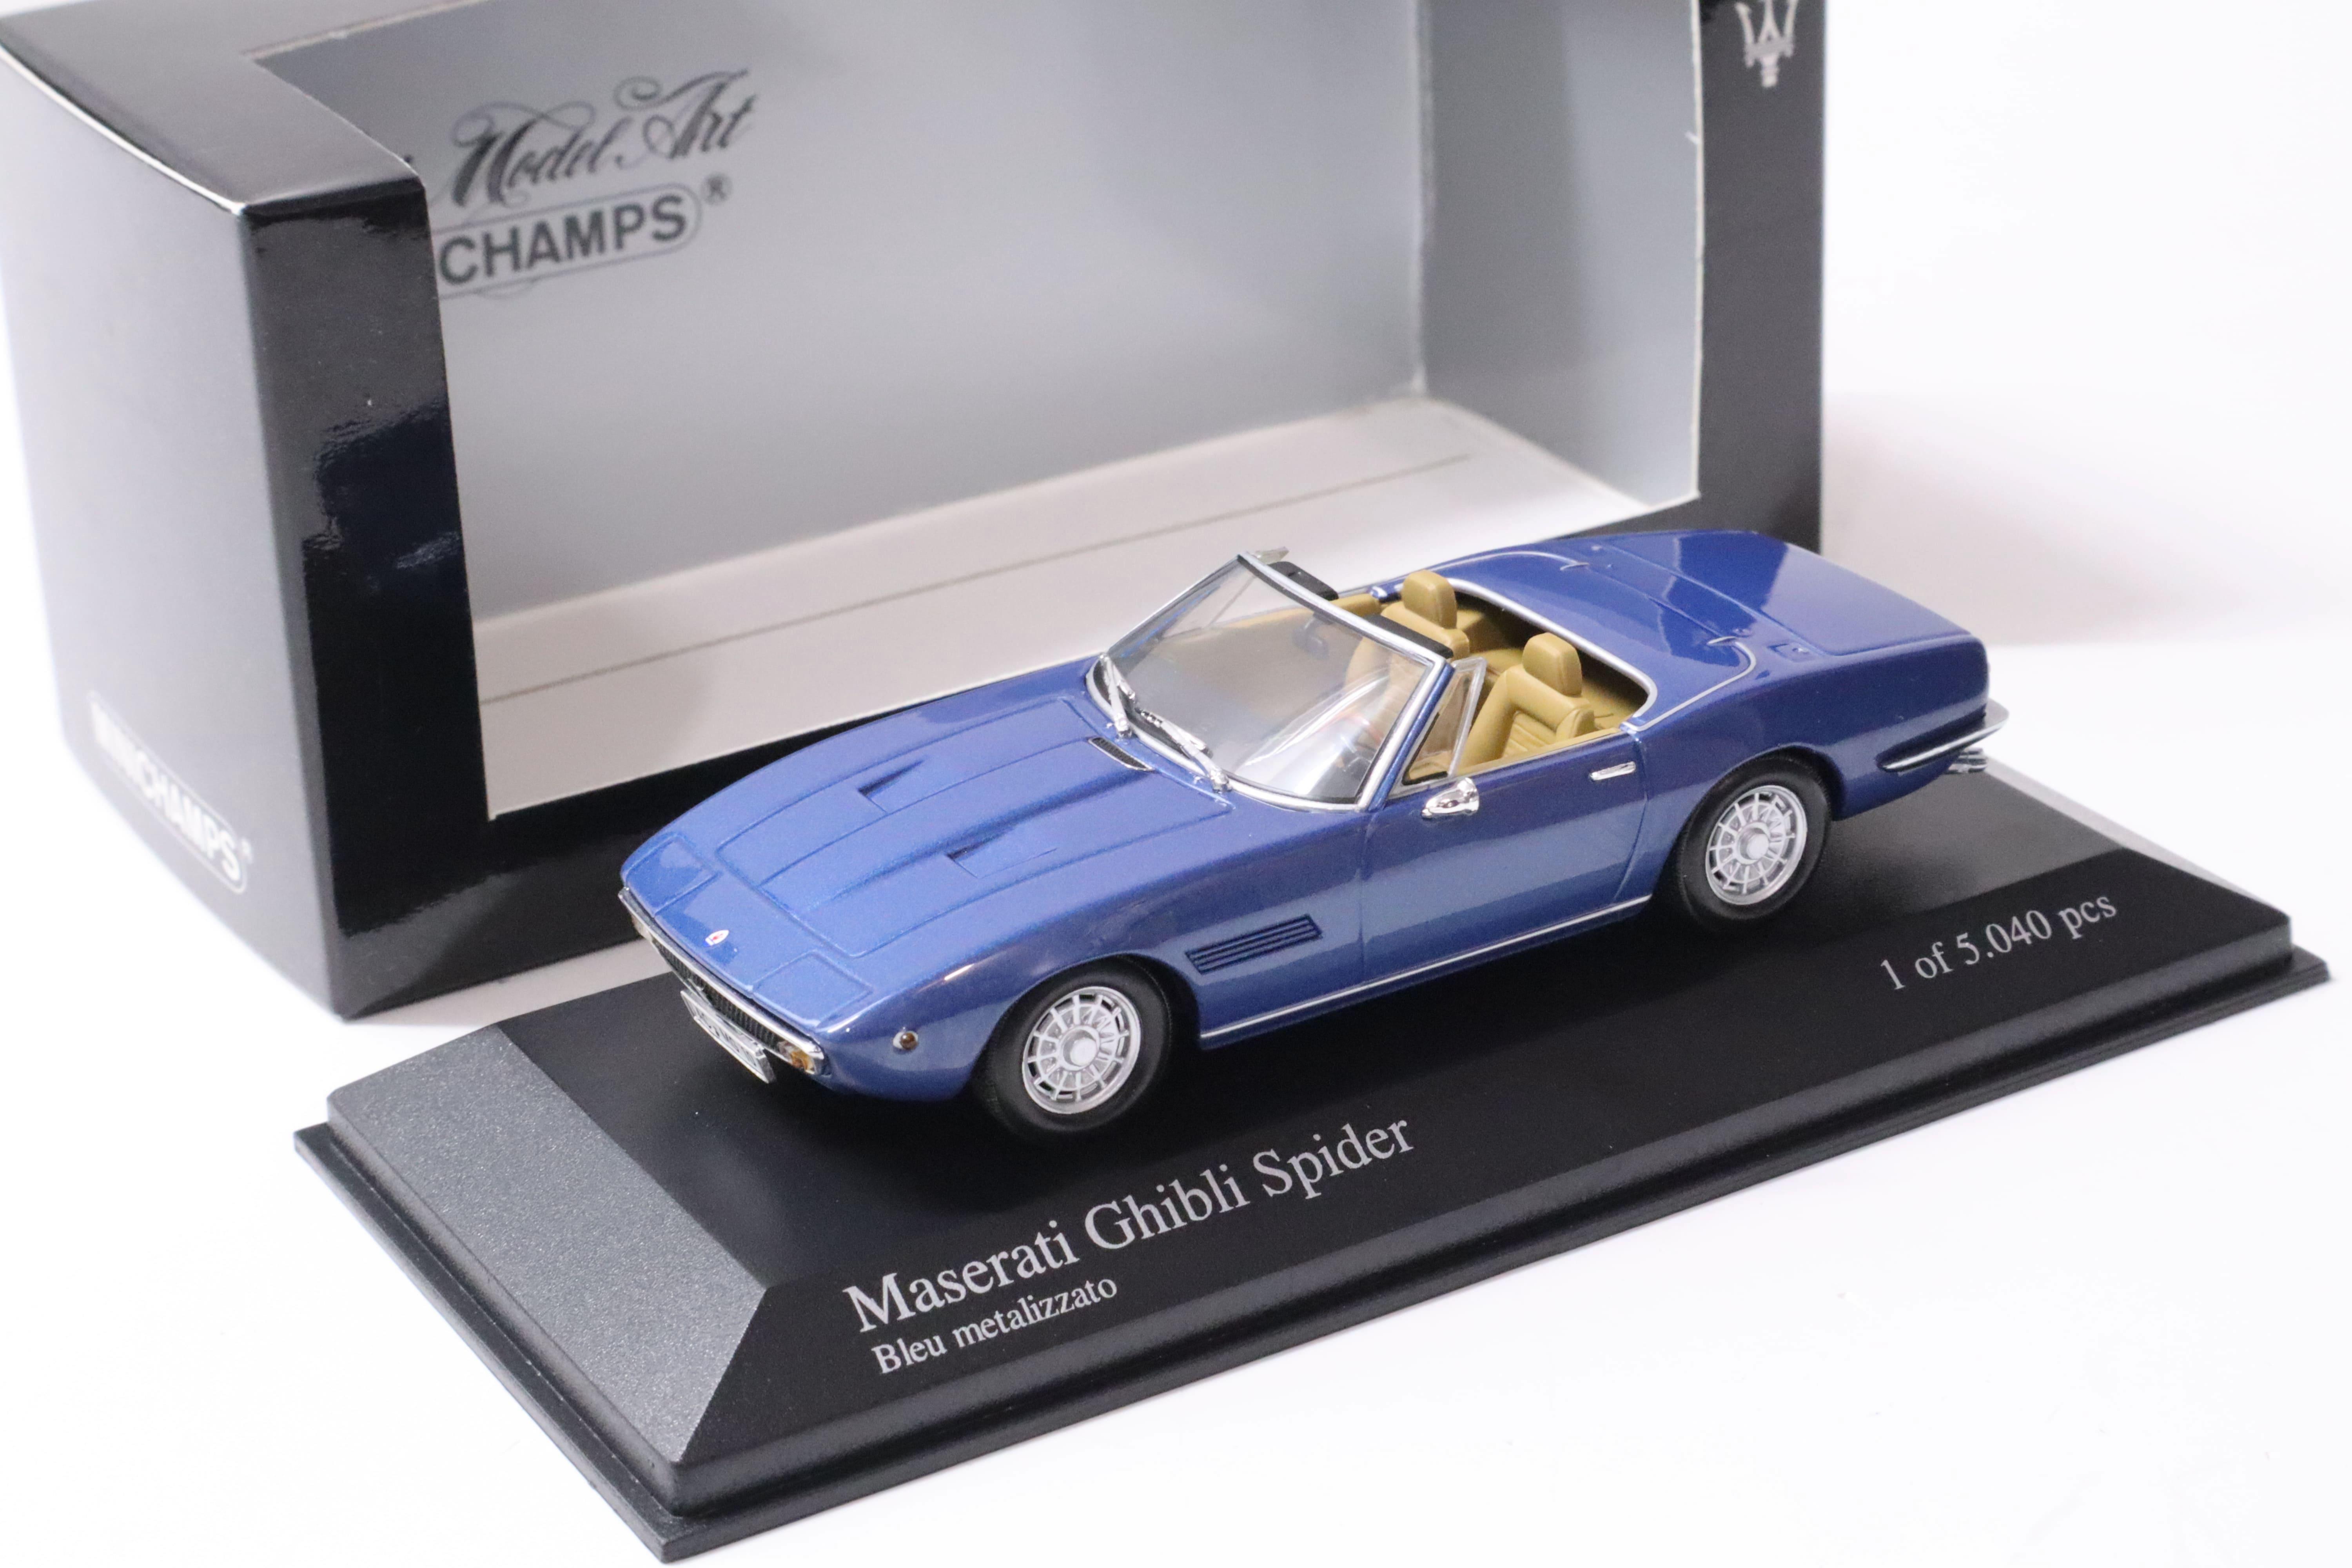 1:43 Minichamps Maserati Ghibli Spider 1969 Bleu metalizzato blue